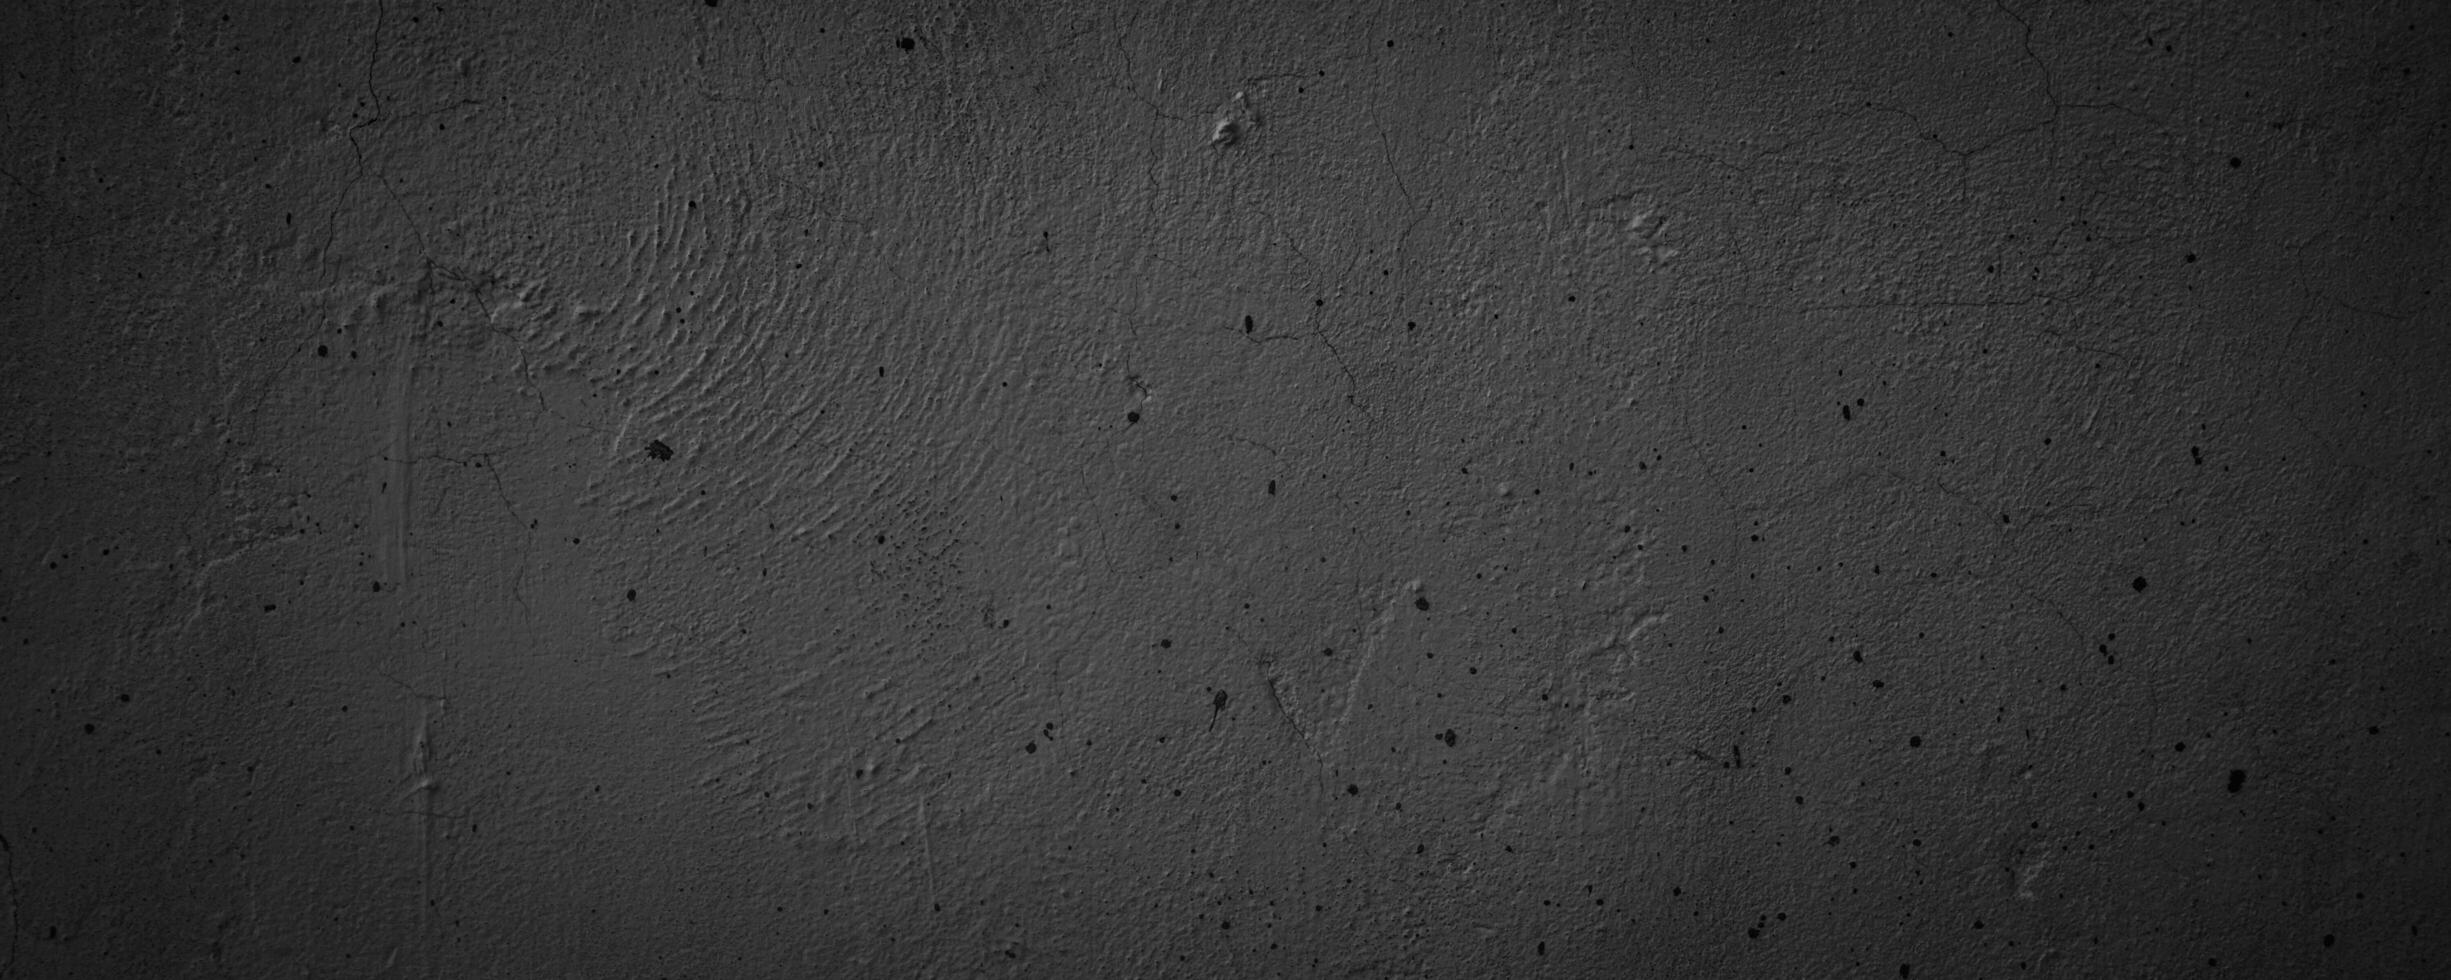 texture abstrait noir grungy mur Contexte photo